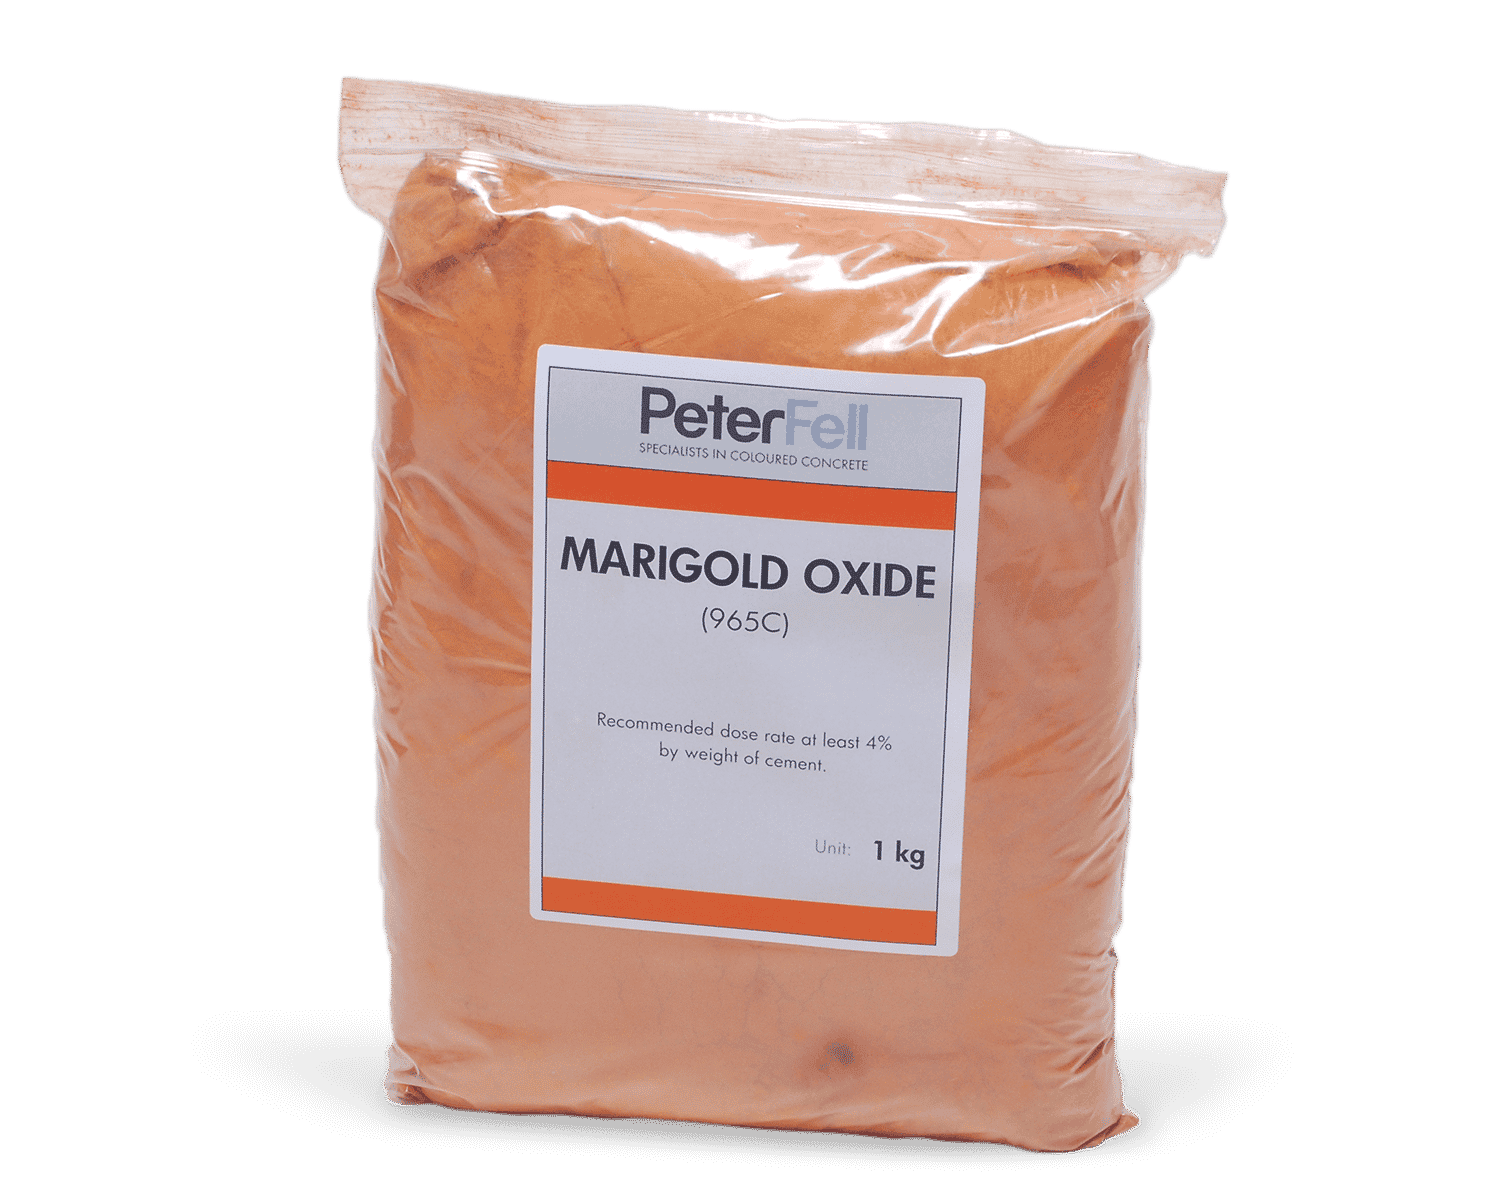 Marigold oxide for colouring concrete